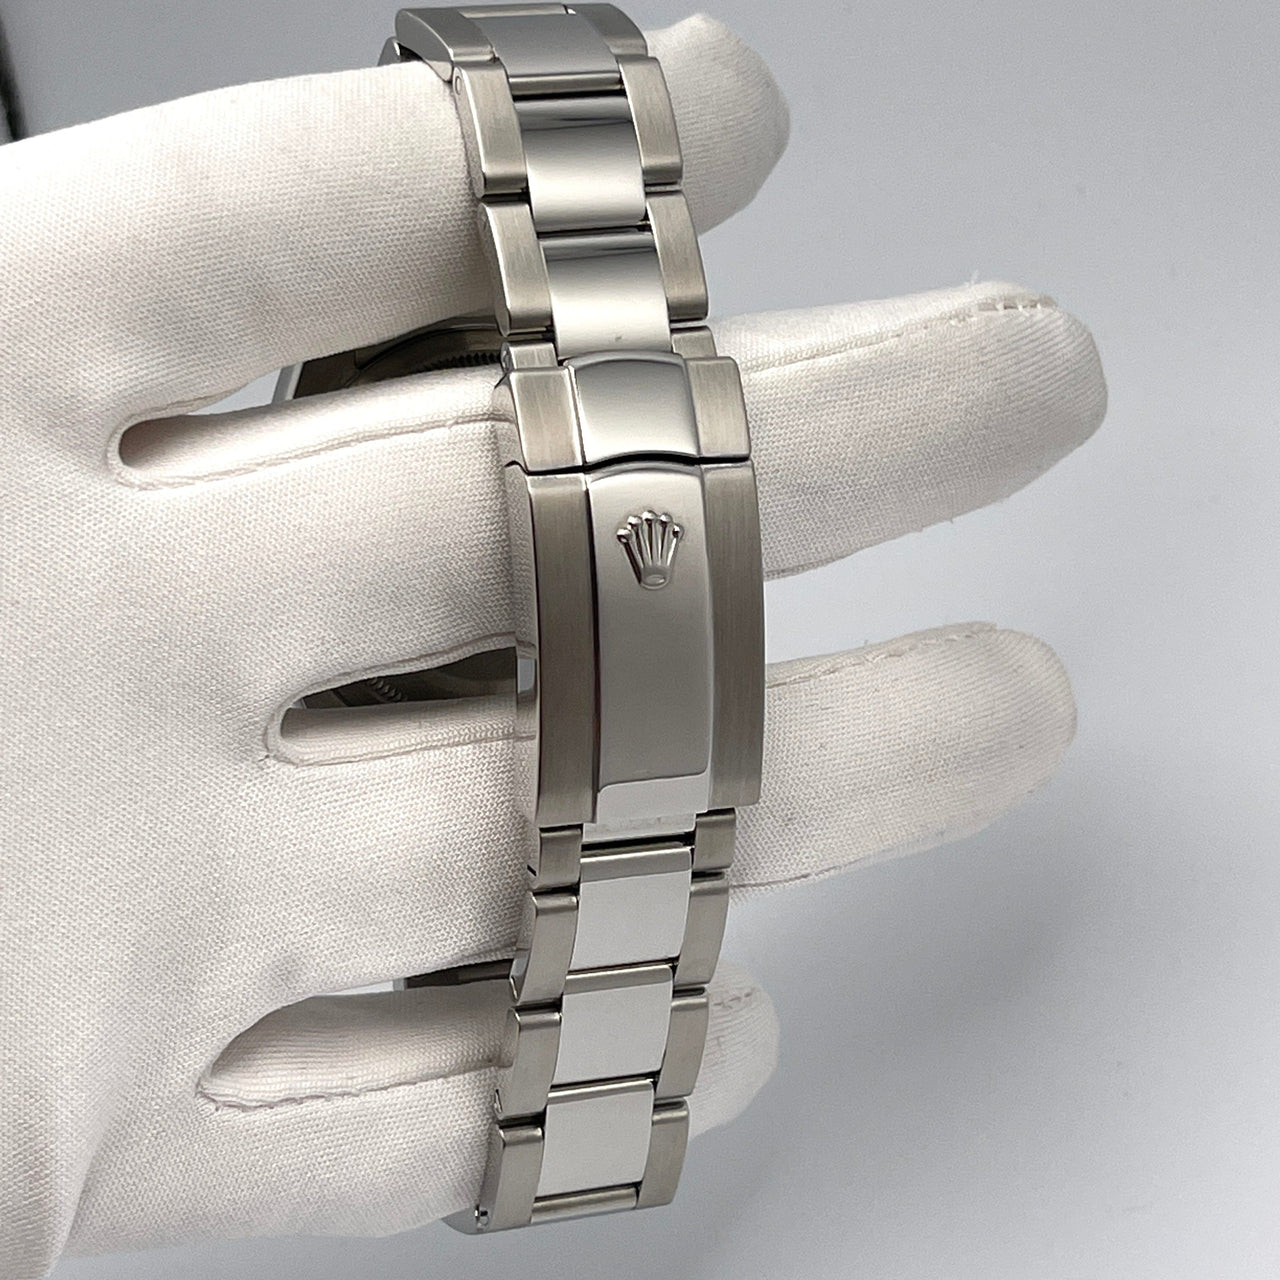 Luxury Watch Rolex Datejust 36 Stainless Steel Pink Dial Oyster 116234 Wrist Aficionado